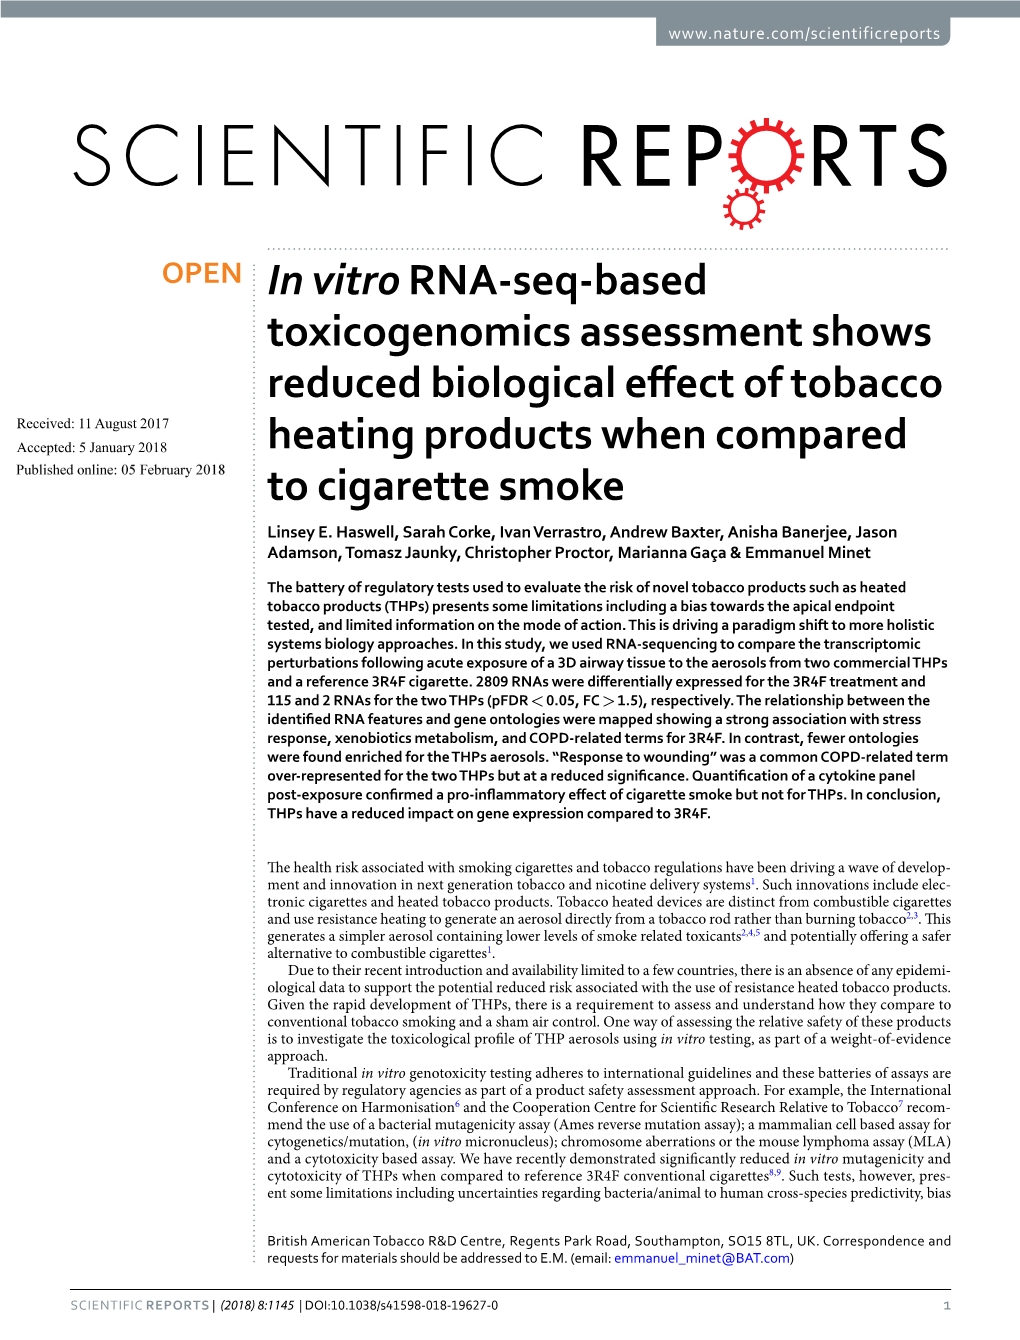 In Vitro RNA-Seq-Based Toxicogenomics Assessment Shows